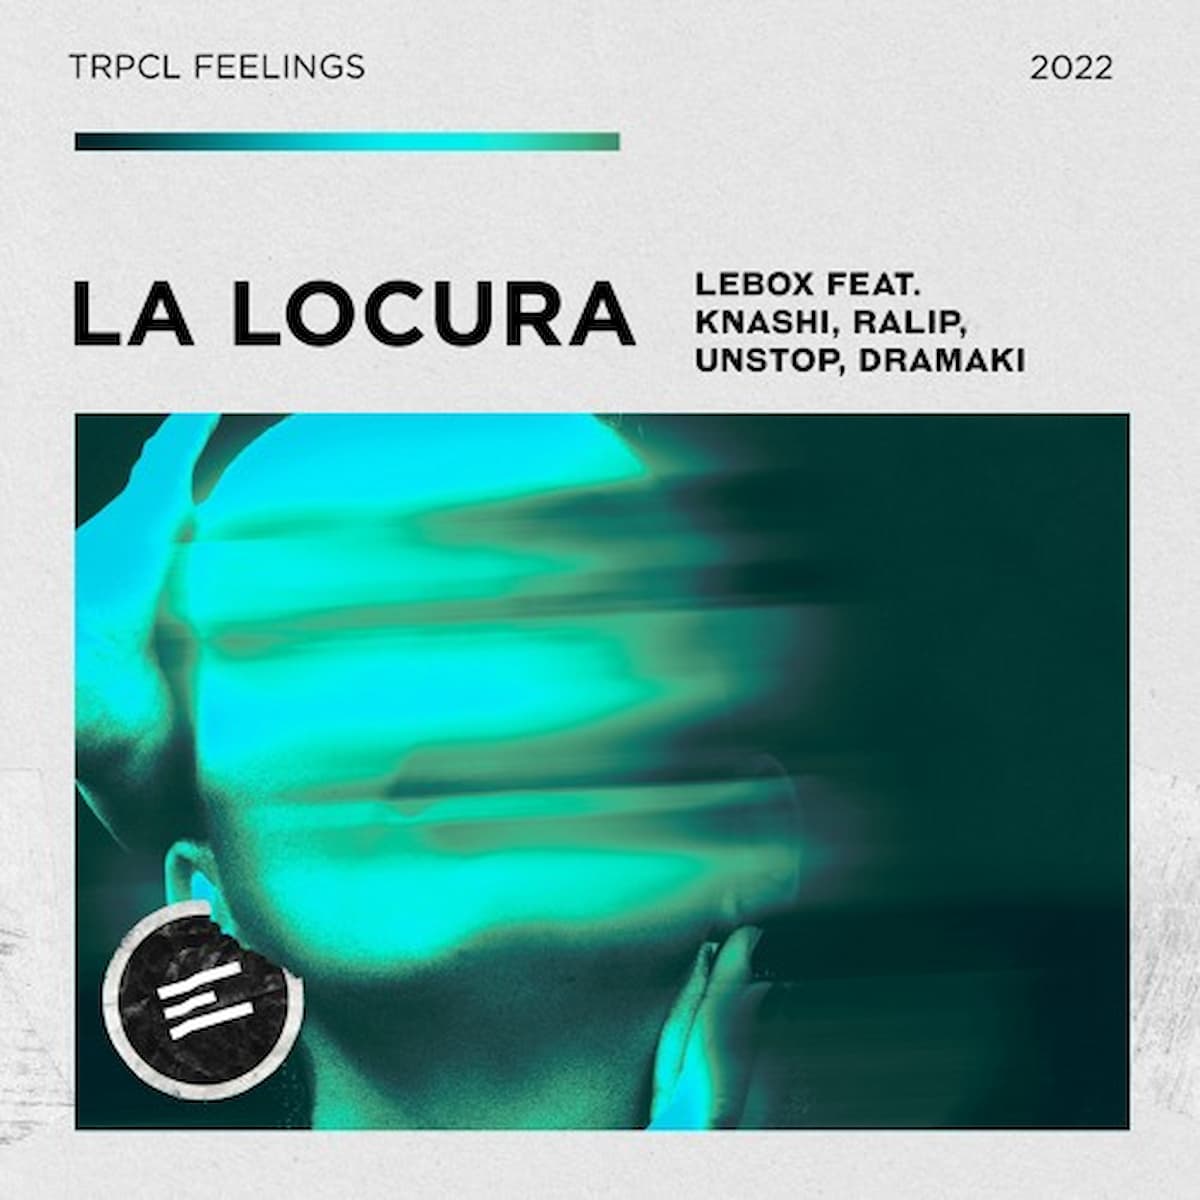 Lebox lança "La Locura", diretamente do projeto "Curso Delas"